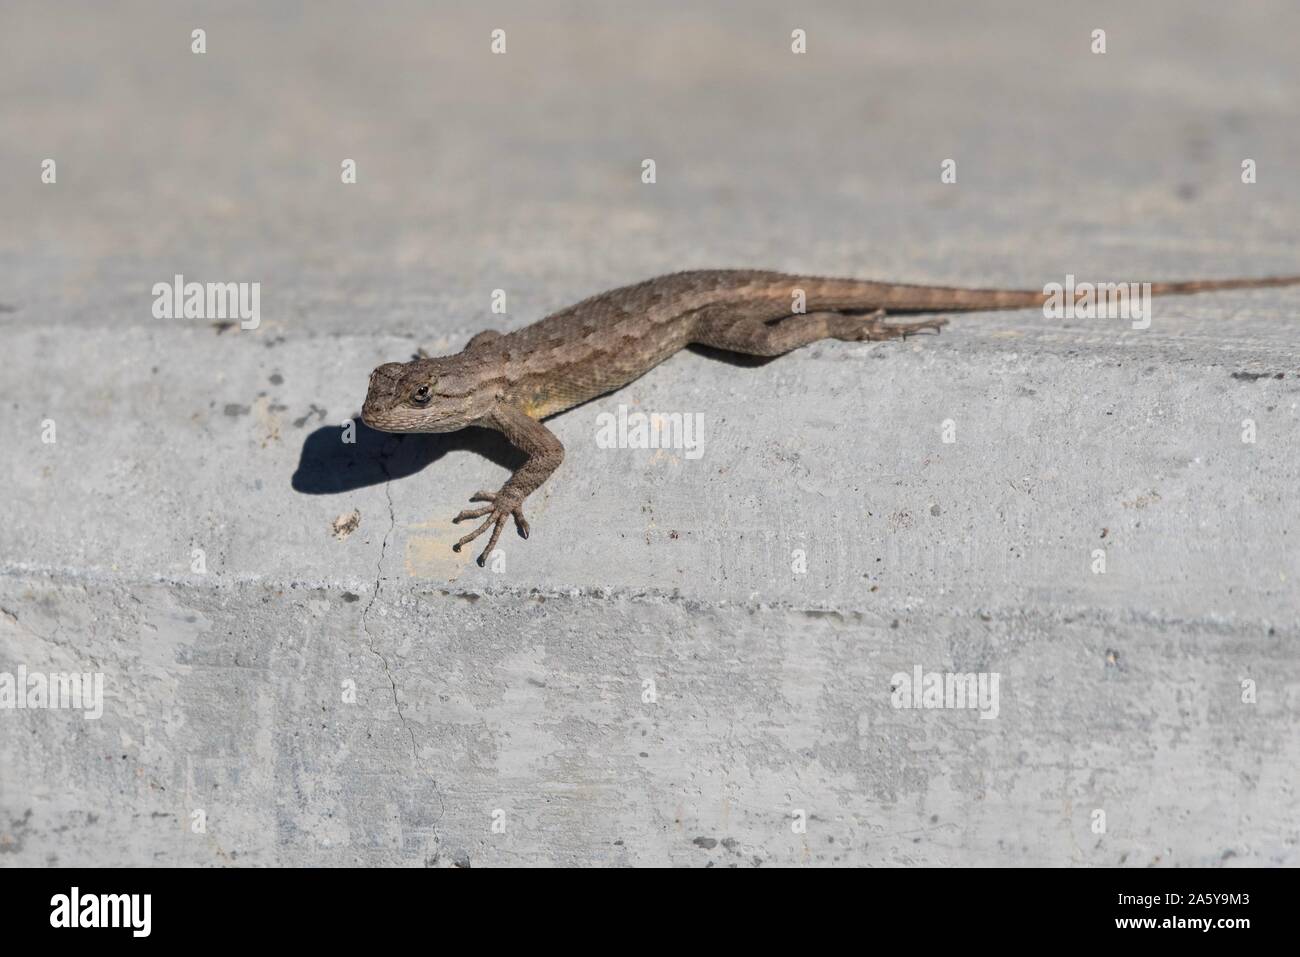 Alert juvenile reptile lizard absorbs the sunlight warmth from his concrete perch. Stock Photo